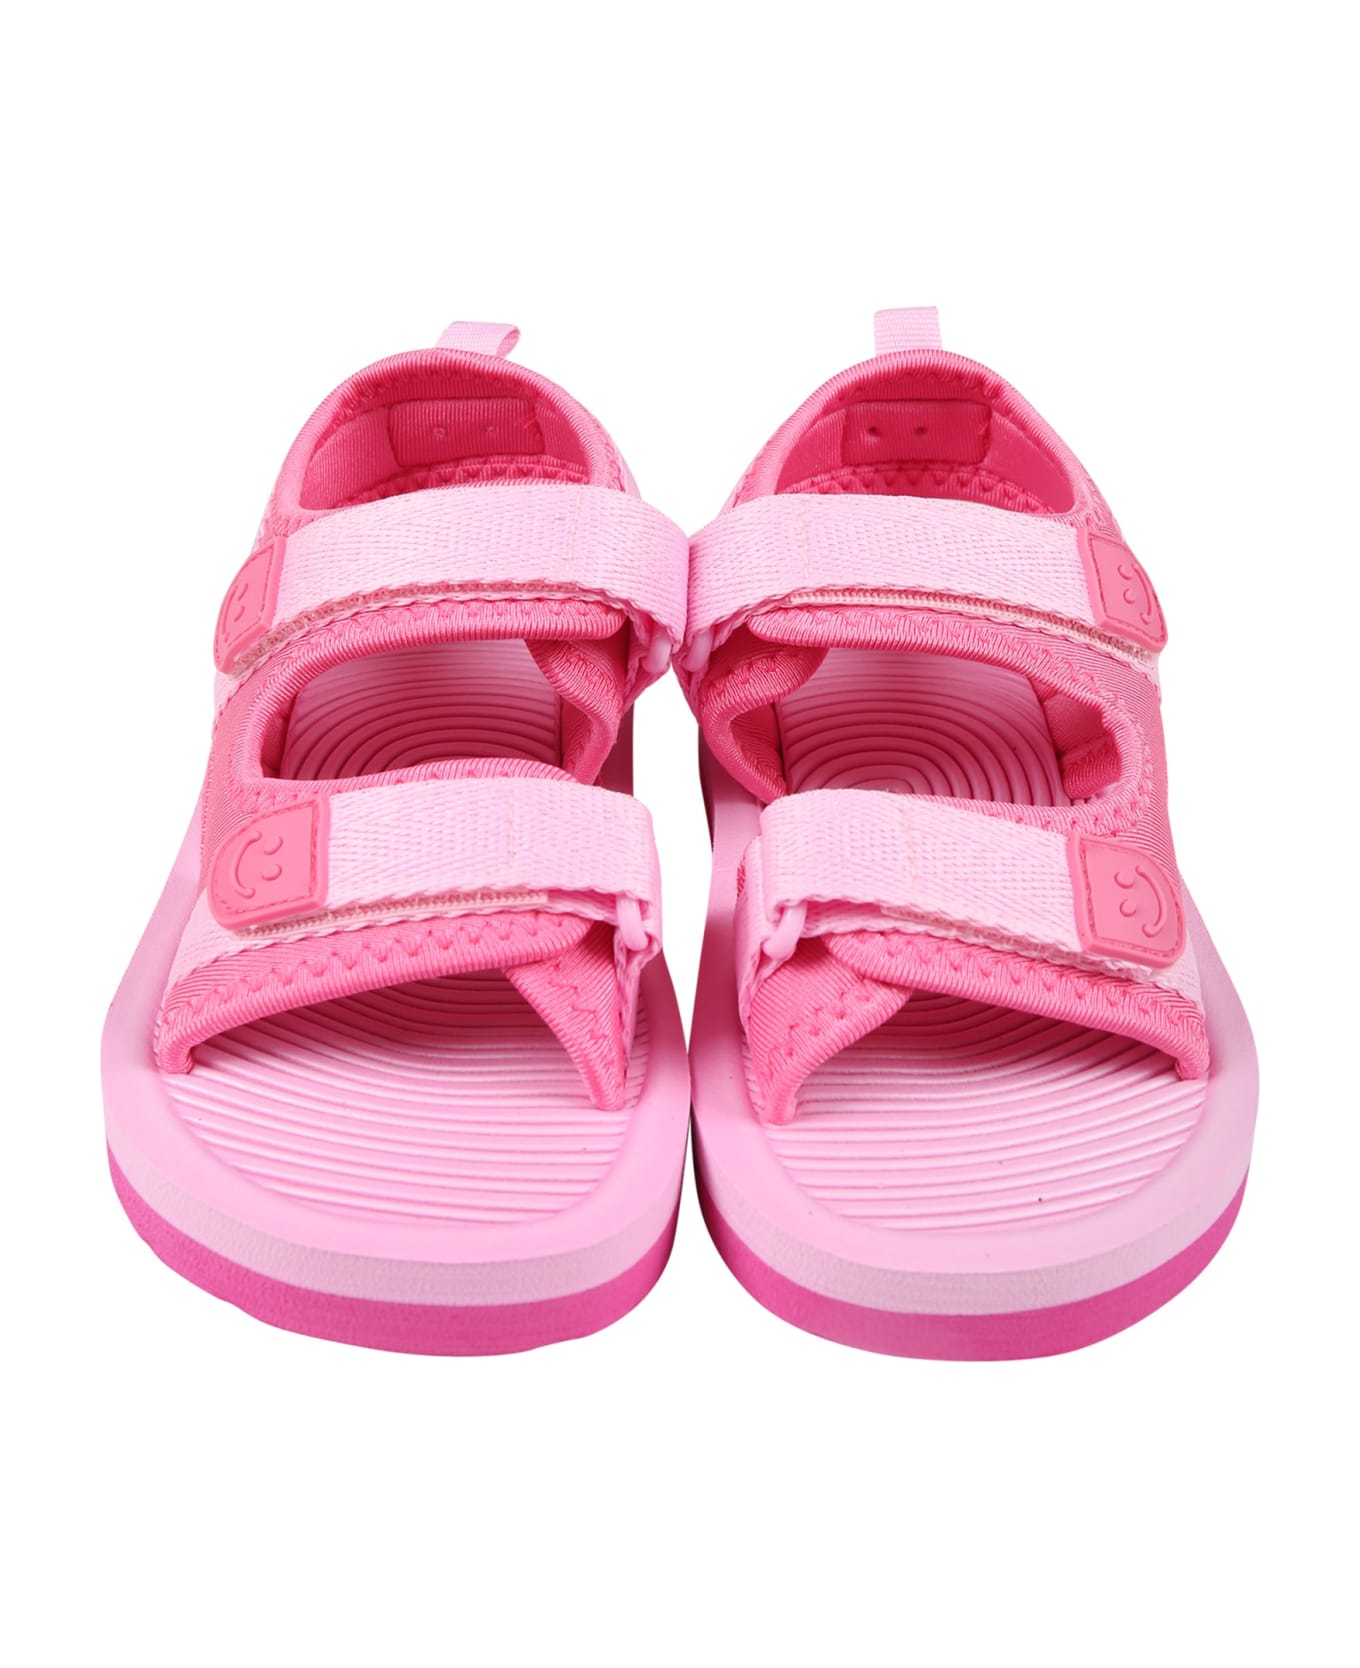 Molo Fuchsia Sandals For Girl With Logo - Fuchsia シューズ